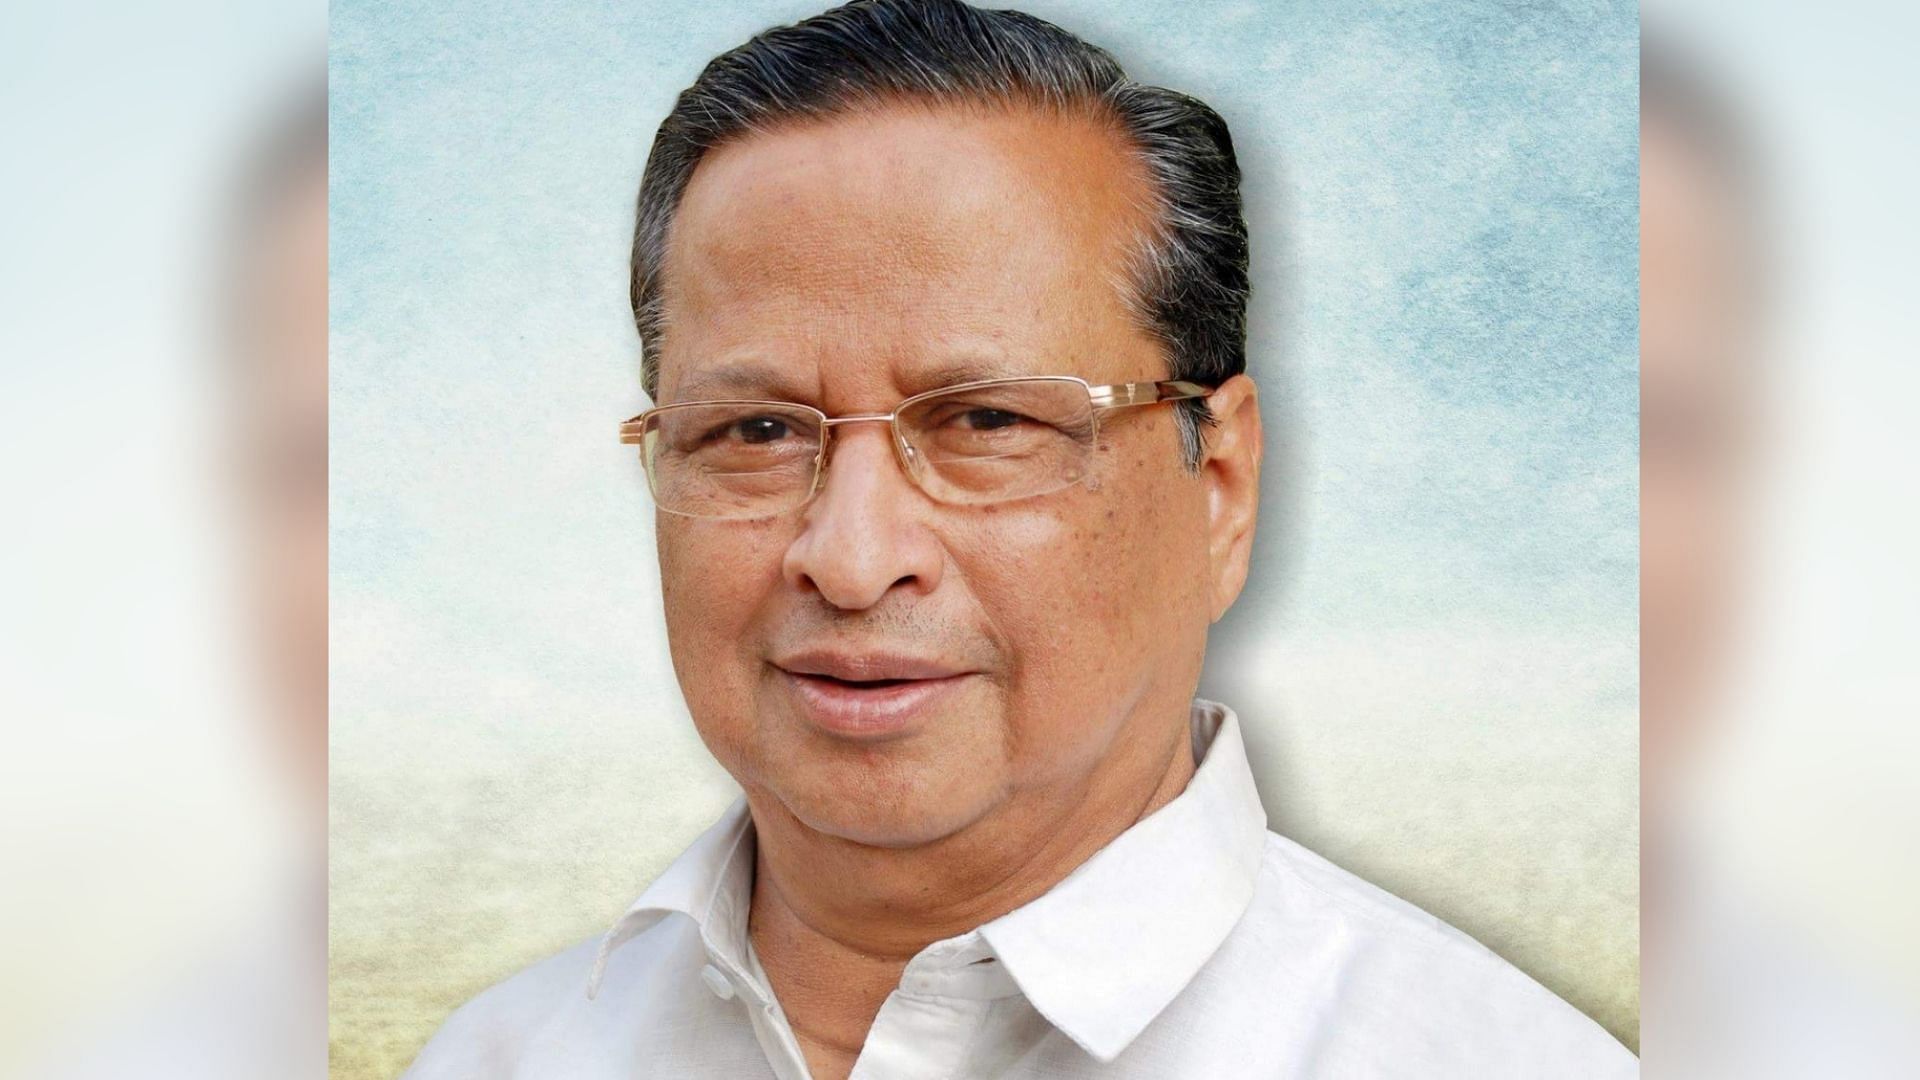 Odisha Pradesh Congress Committee President Niranjan Patnaik has announced his resignation from the post